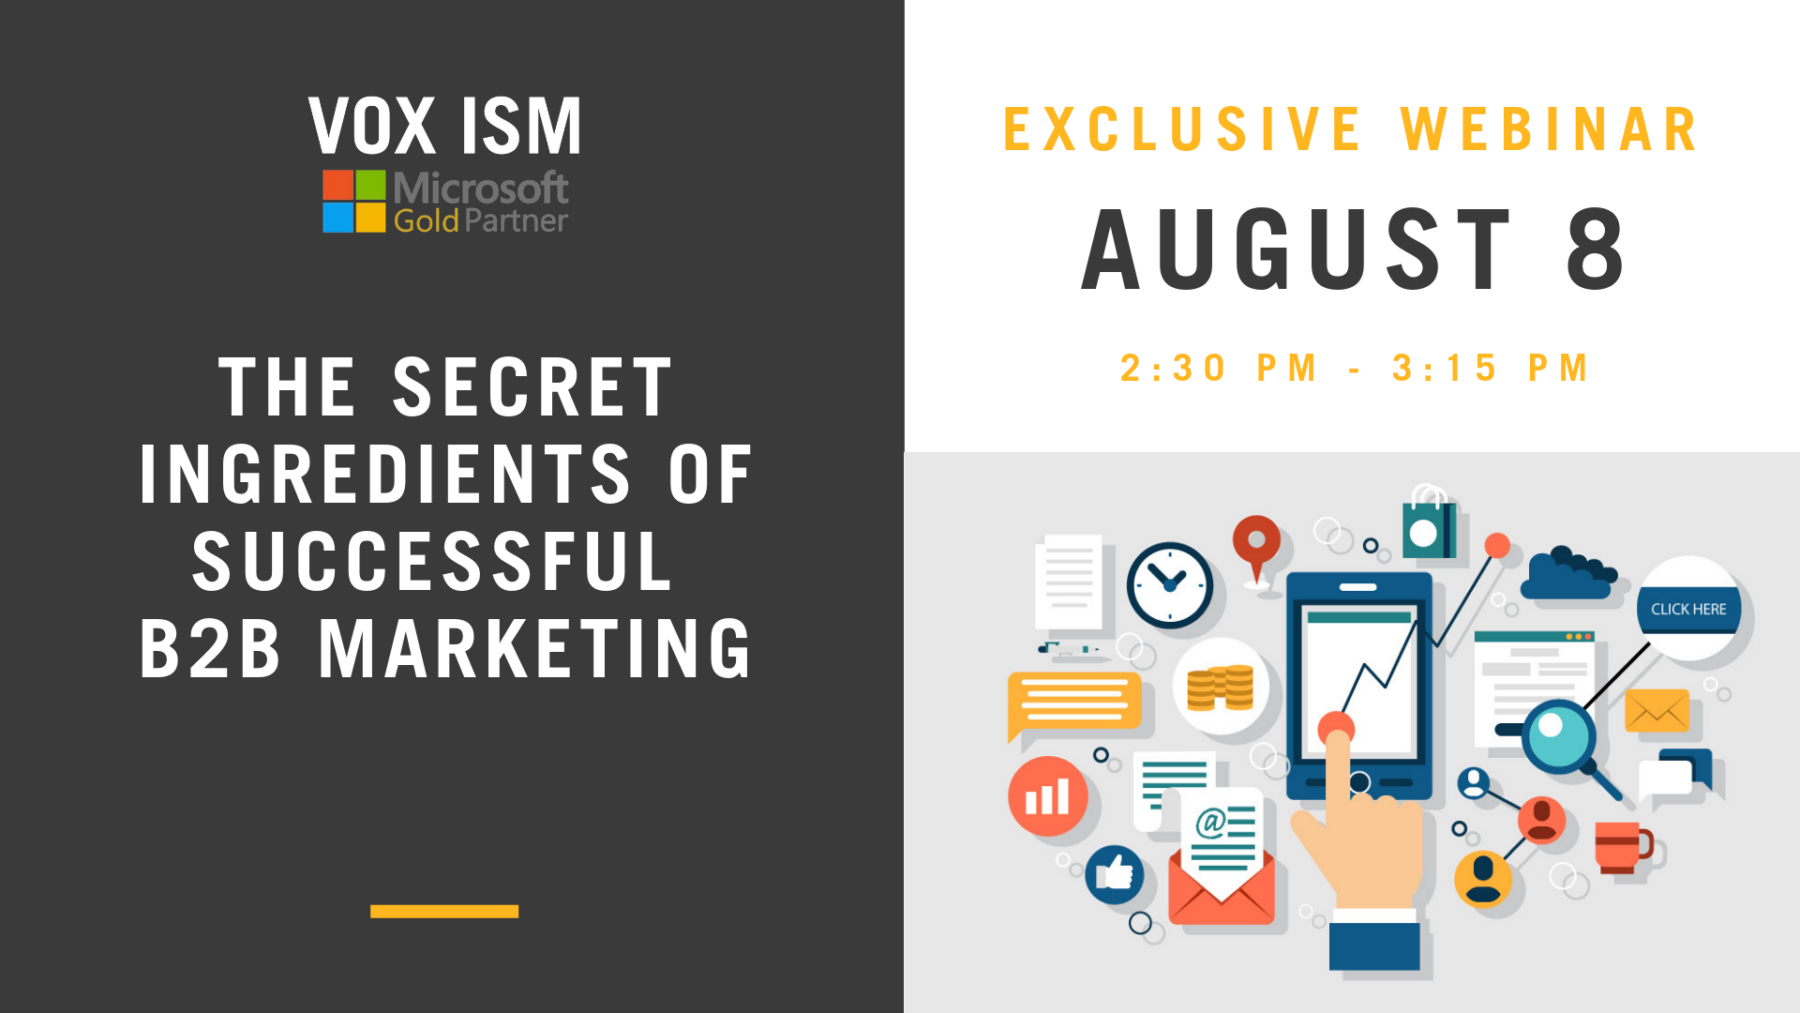 The Secret Ingredients of Successful B2B Marketing - August 8 - Webinar - VOX ISM